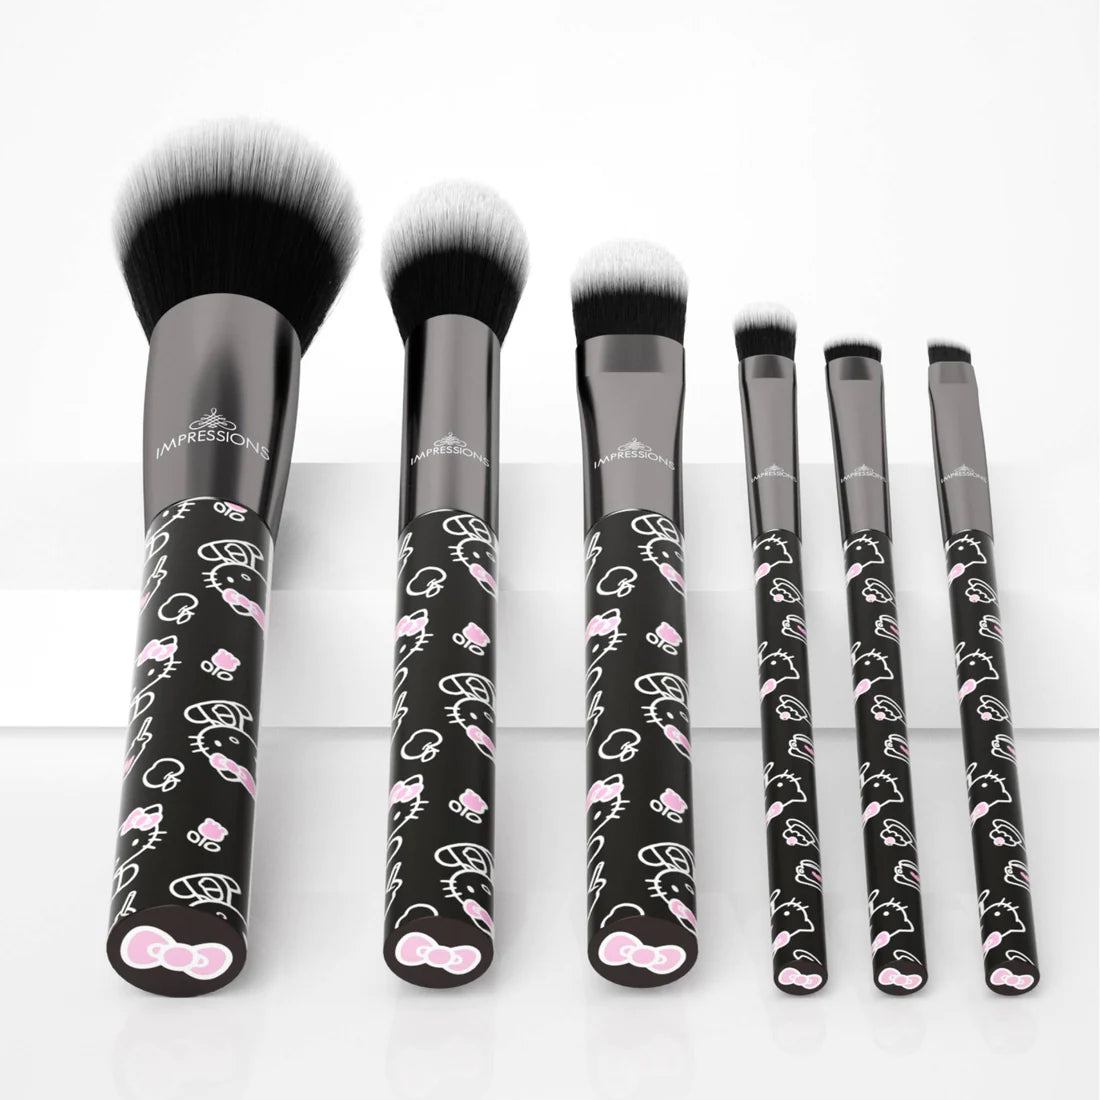 Impressions Vanity - Hello Kitty The Favorites 6pc Brush Set